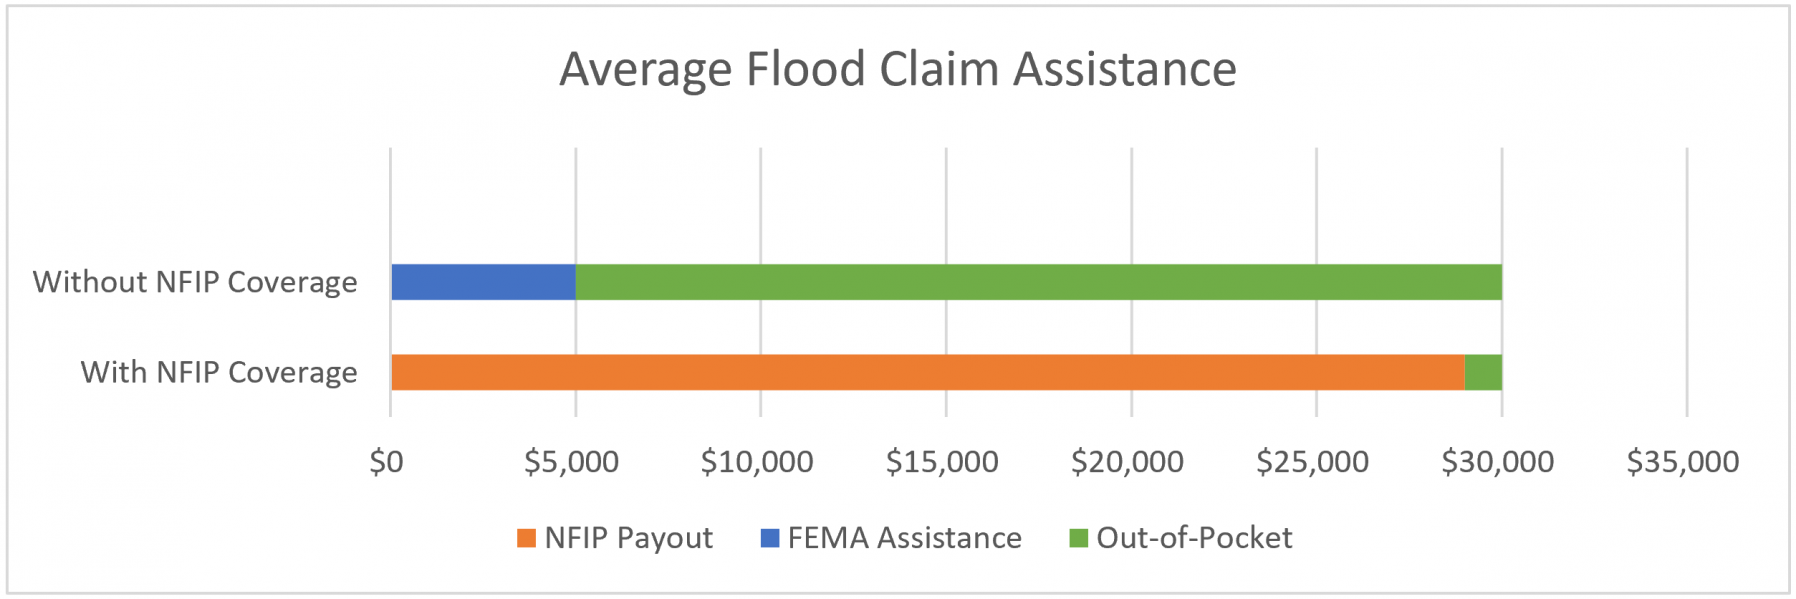 Average Flood Claim Assistance Table